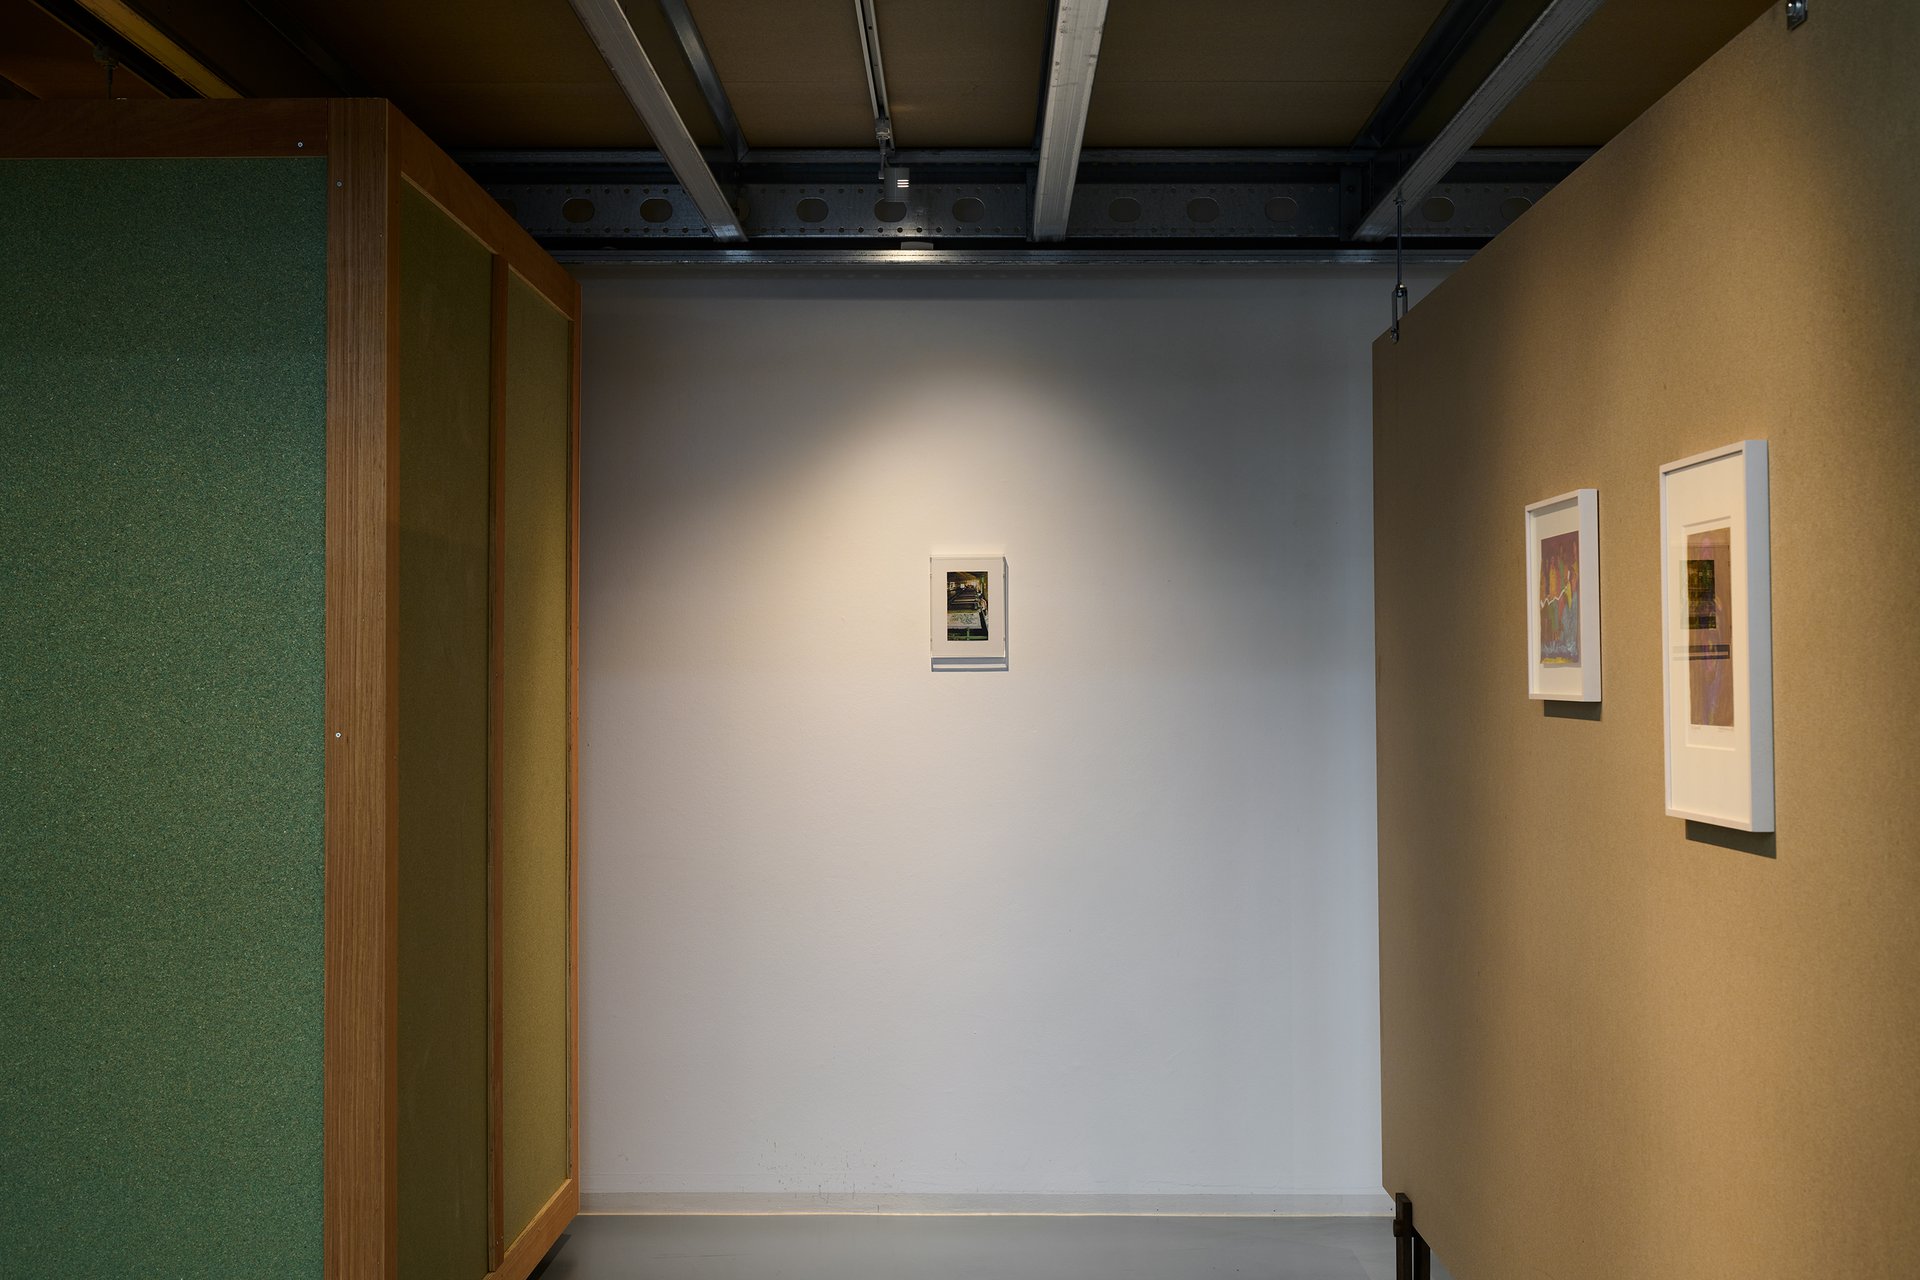 David Medalla, Parables of Friendship, Installation view, Bonner Kunstverein, 2021. Photo: Mareike Tocha.